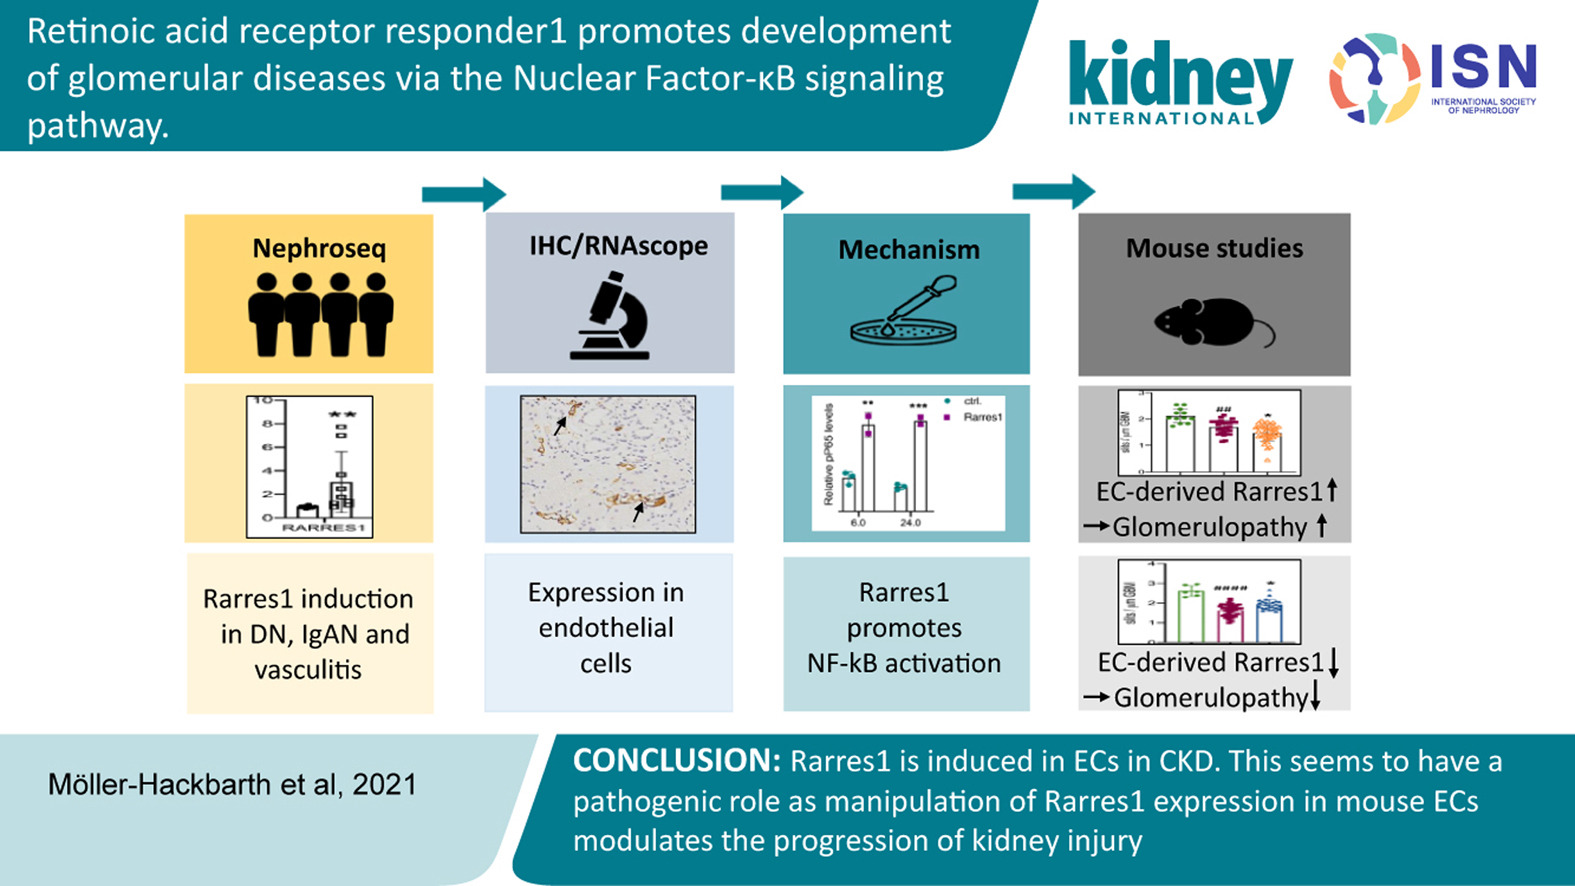 Retinoic Acid Receptor Responder1 Promotes Development of Glomerular Diseases via the Nuclear Factor-KB Signaling Pathway